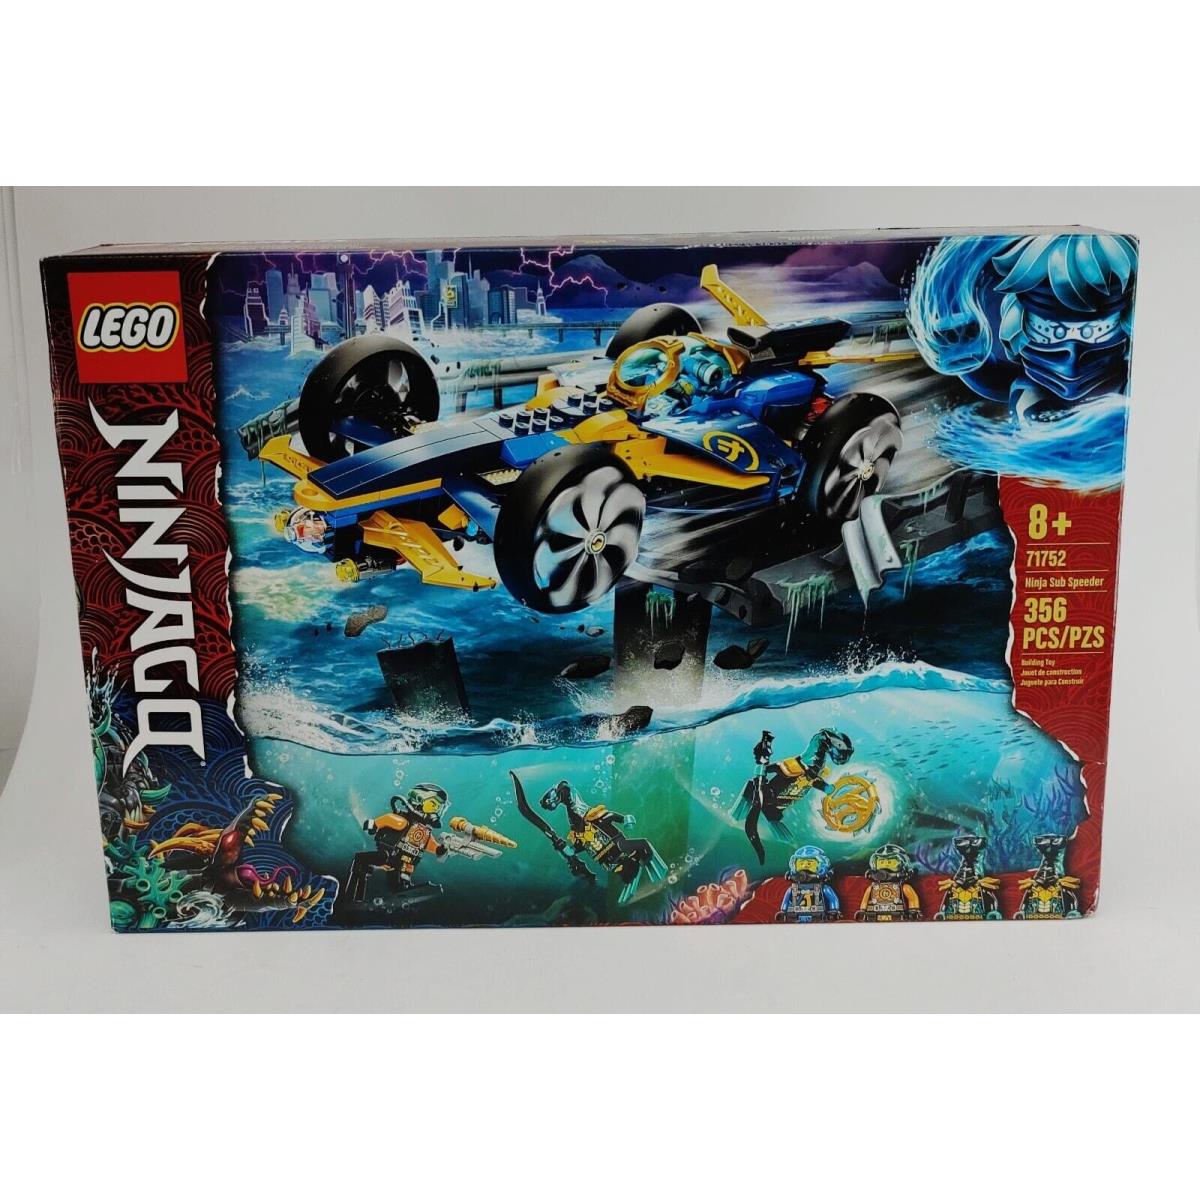 Lego 71752 Ninjago Ninja Sub Speeder Building Set 2in1 Submarine Car Toys